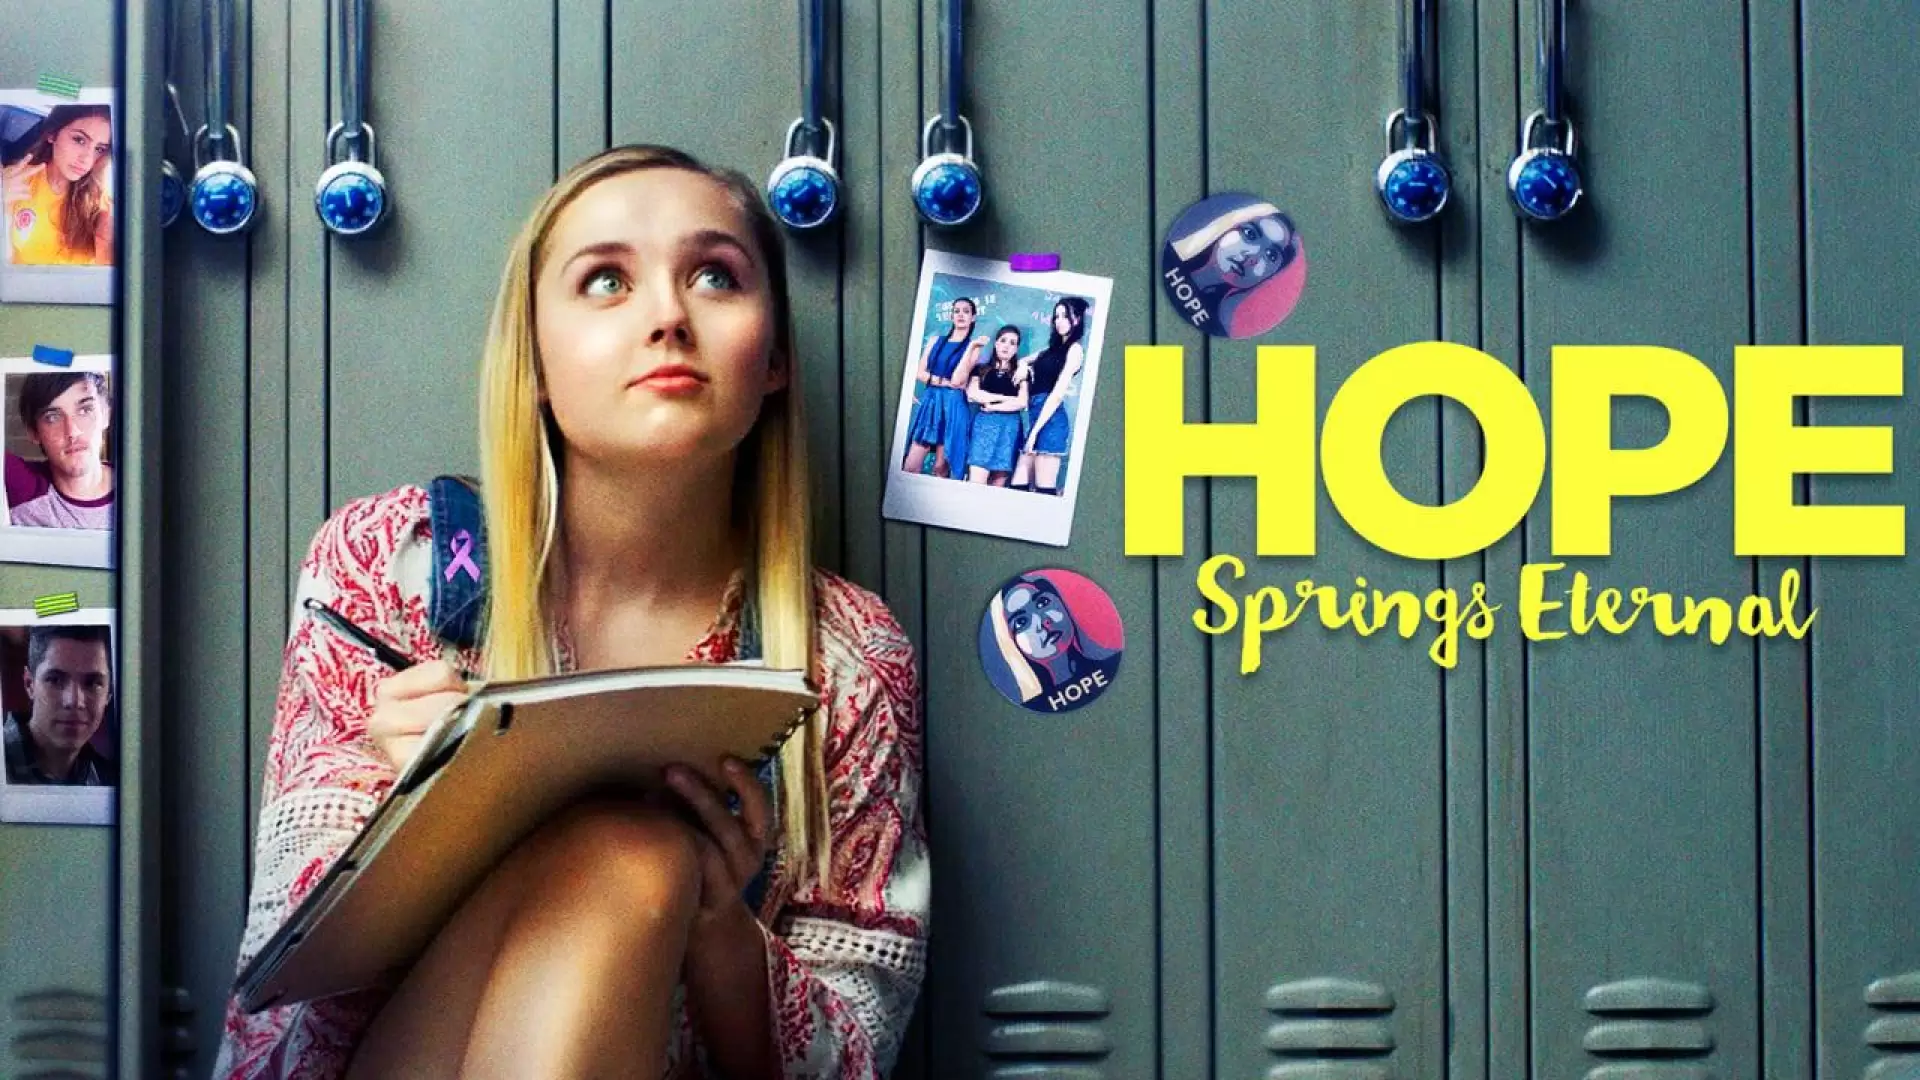 دانلود فیلم Hope Springs Eternal 2018 با زیرنویس فارسی و تماشای آنلاین